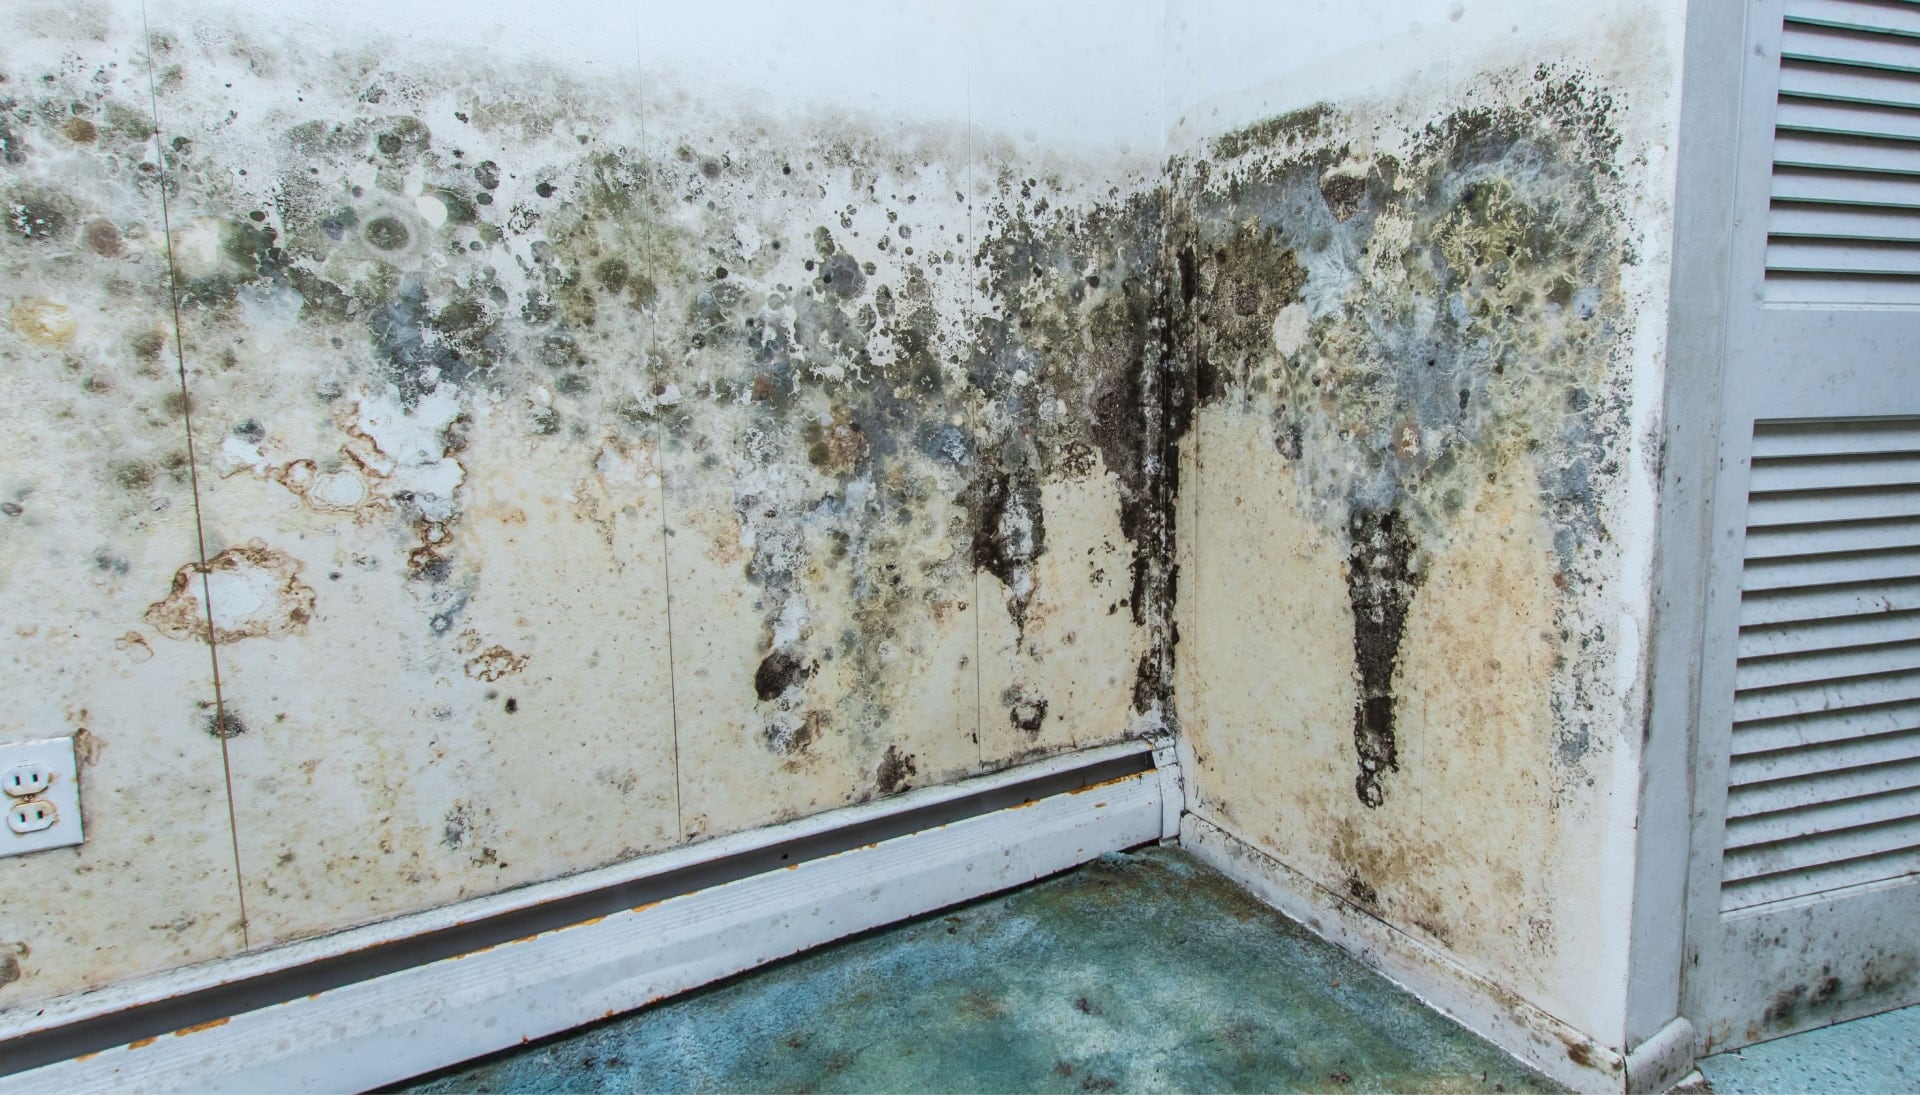 Professional mold removal, odor control, and water damage restoration service in Cedar Rapids, Iowa.